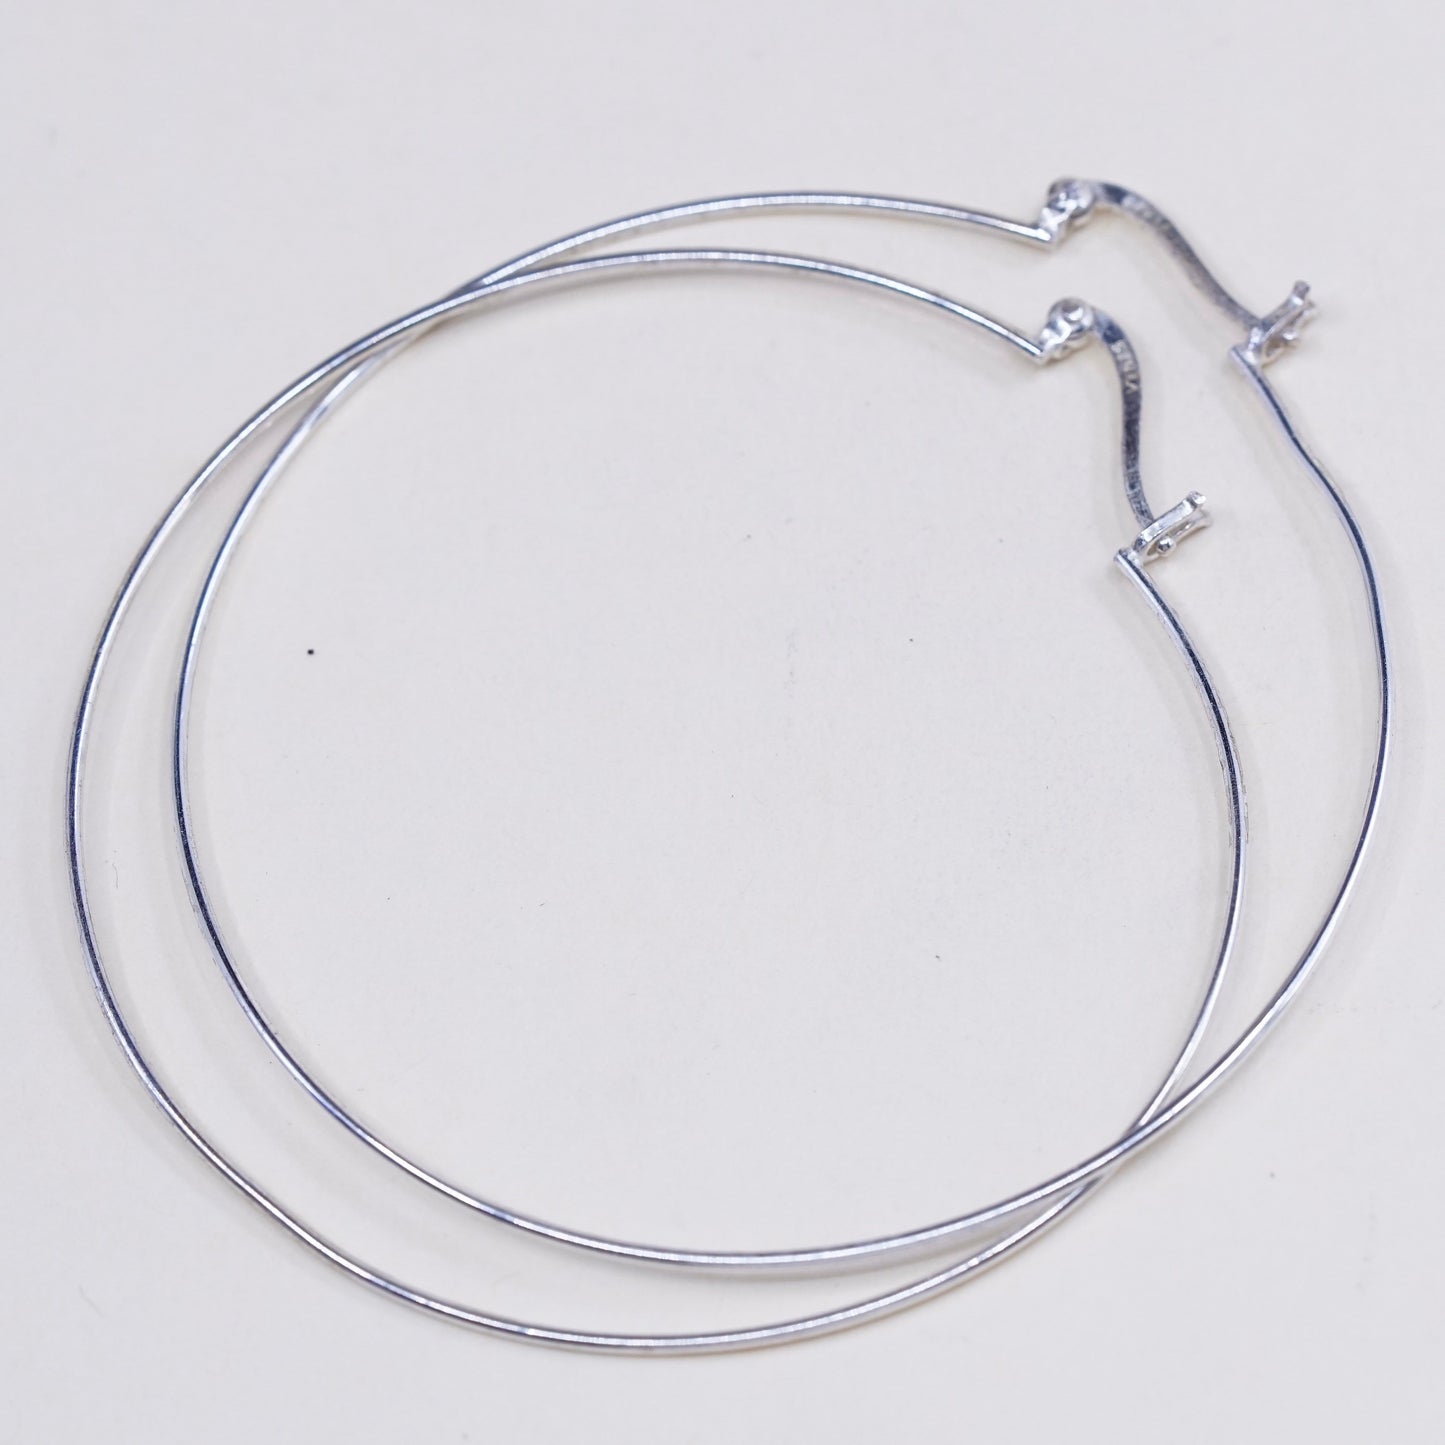 2.5” Vintage sterling silver earrings, lightweight minimalist primitive hoops